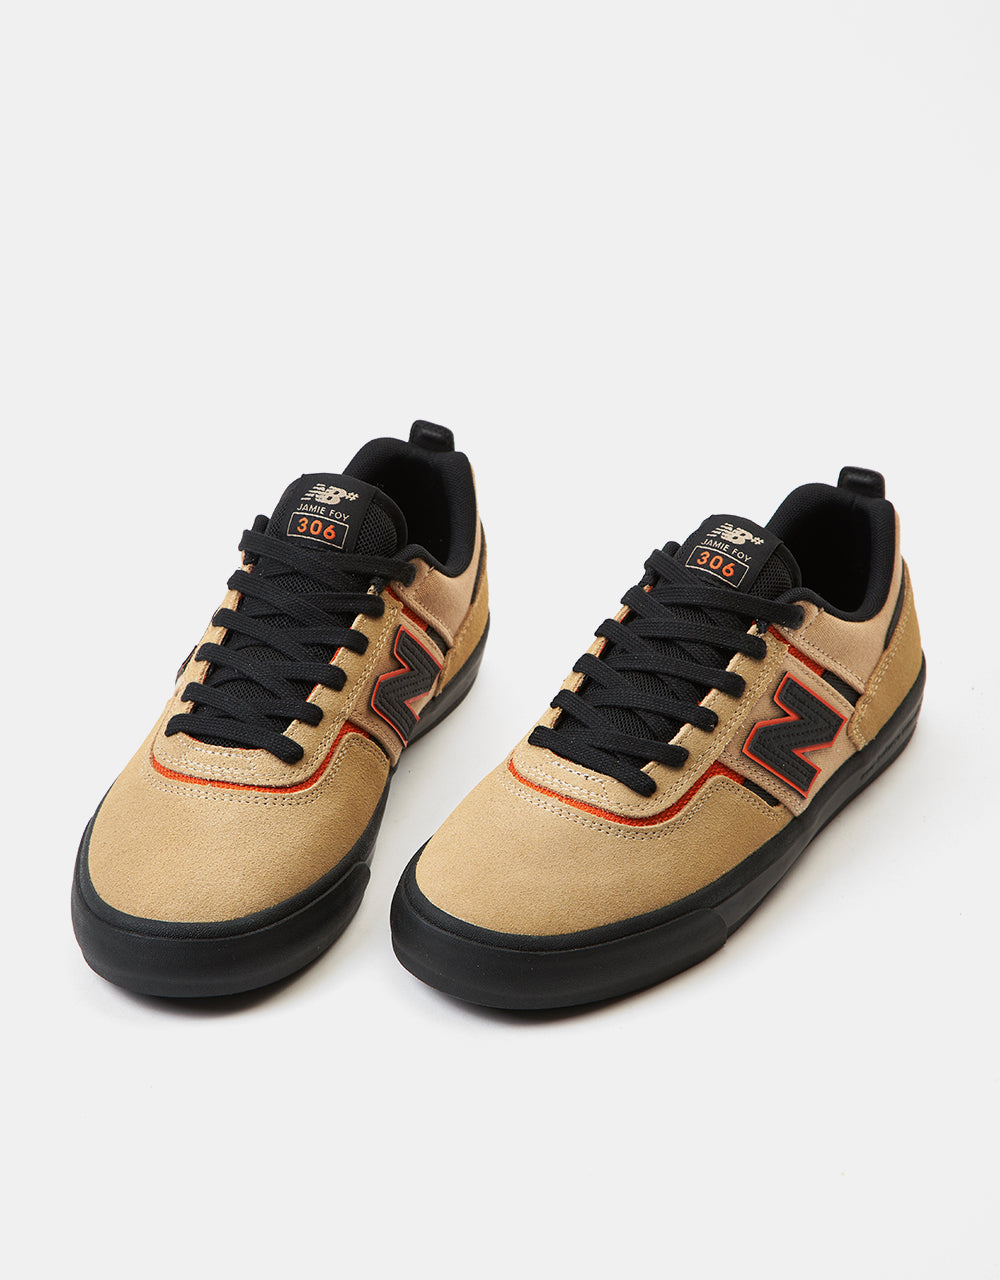 New Balance Numeric Jamie Foy 306 Skate Shoes - Khaki/Black